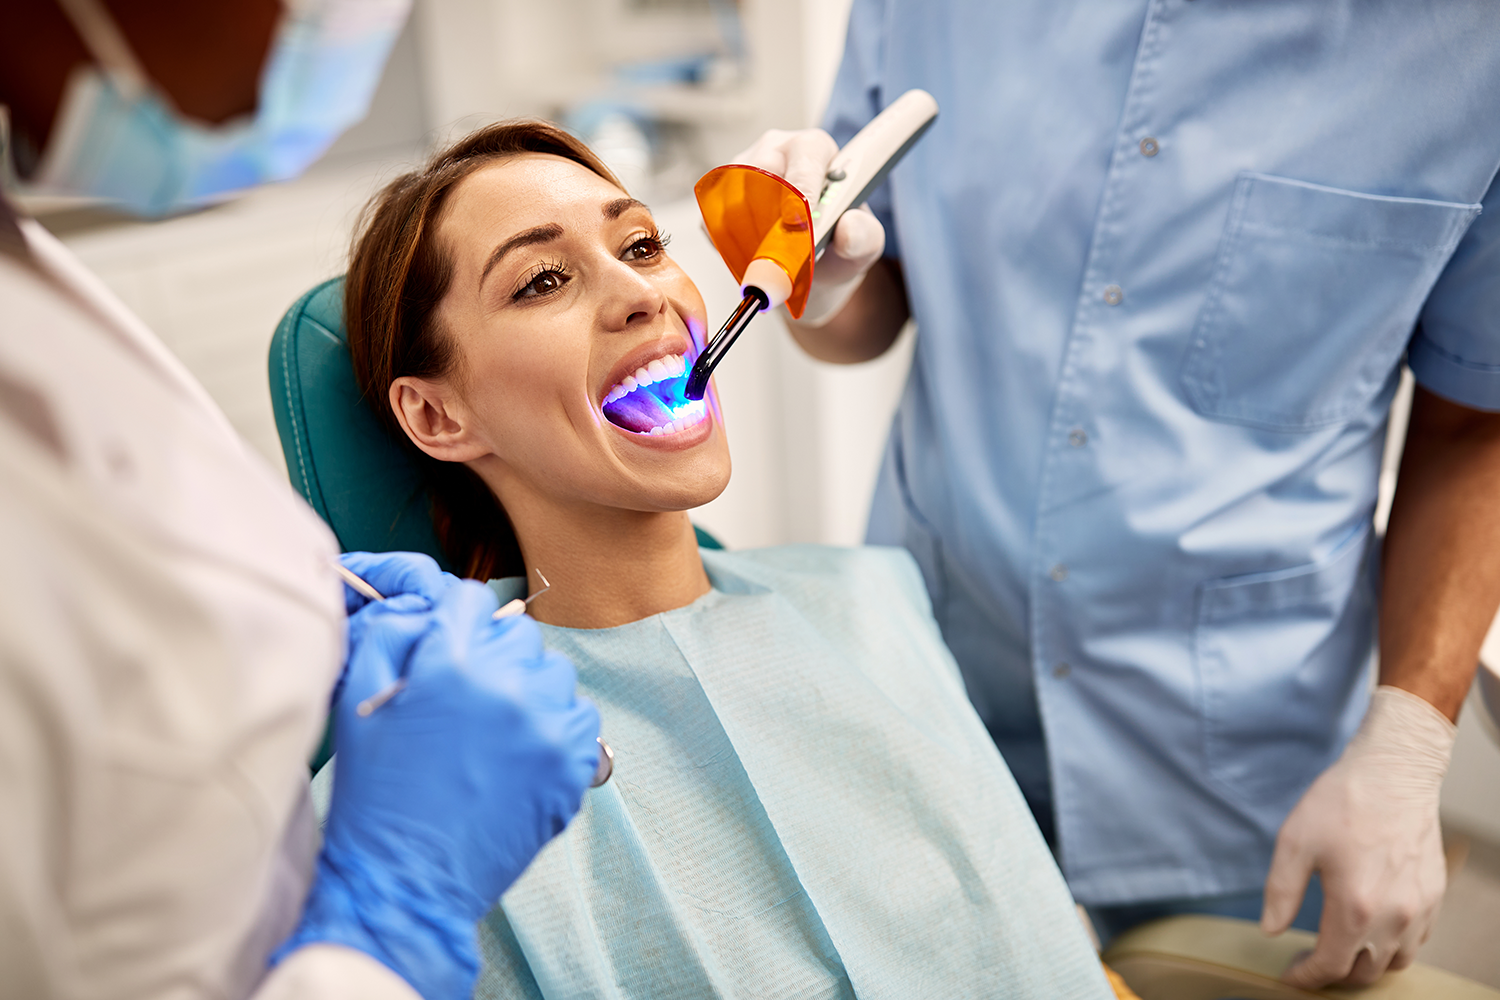 women getting dental treatment using advanced technology